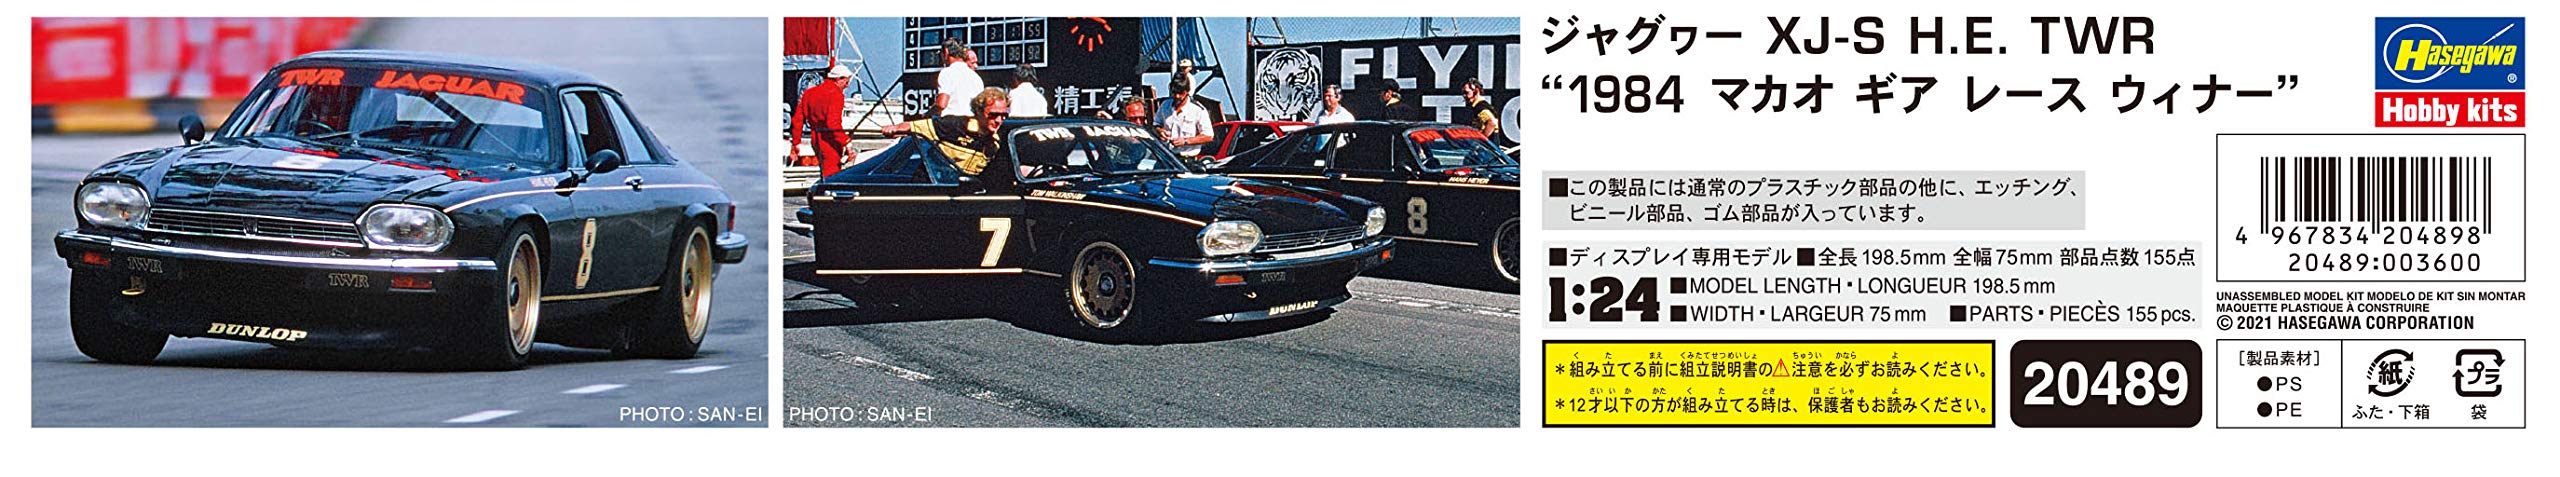 HASEGAWA 1/24 Jaguar Xj-S H.E.Twr 1984 Macau Guia Race Winner Plastic Model